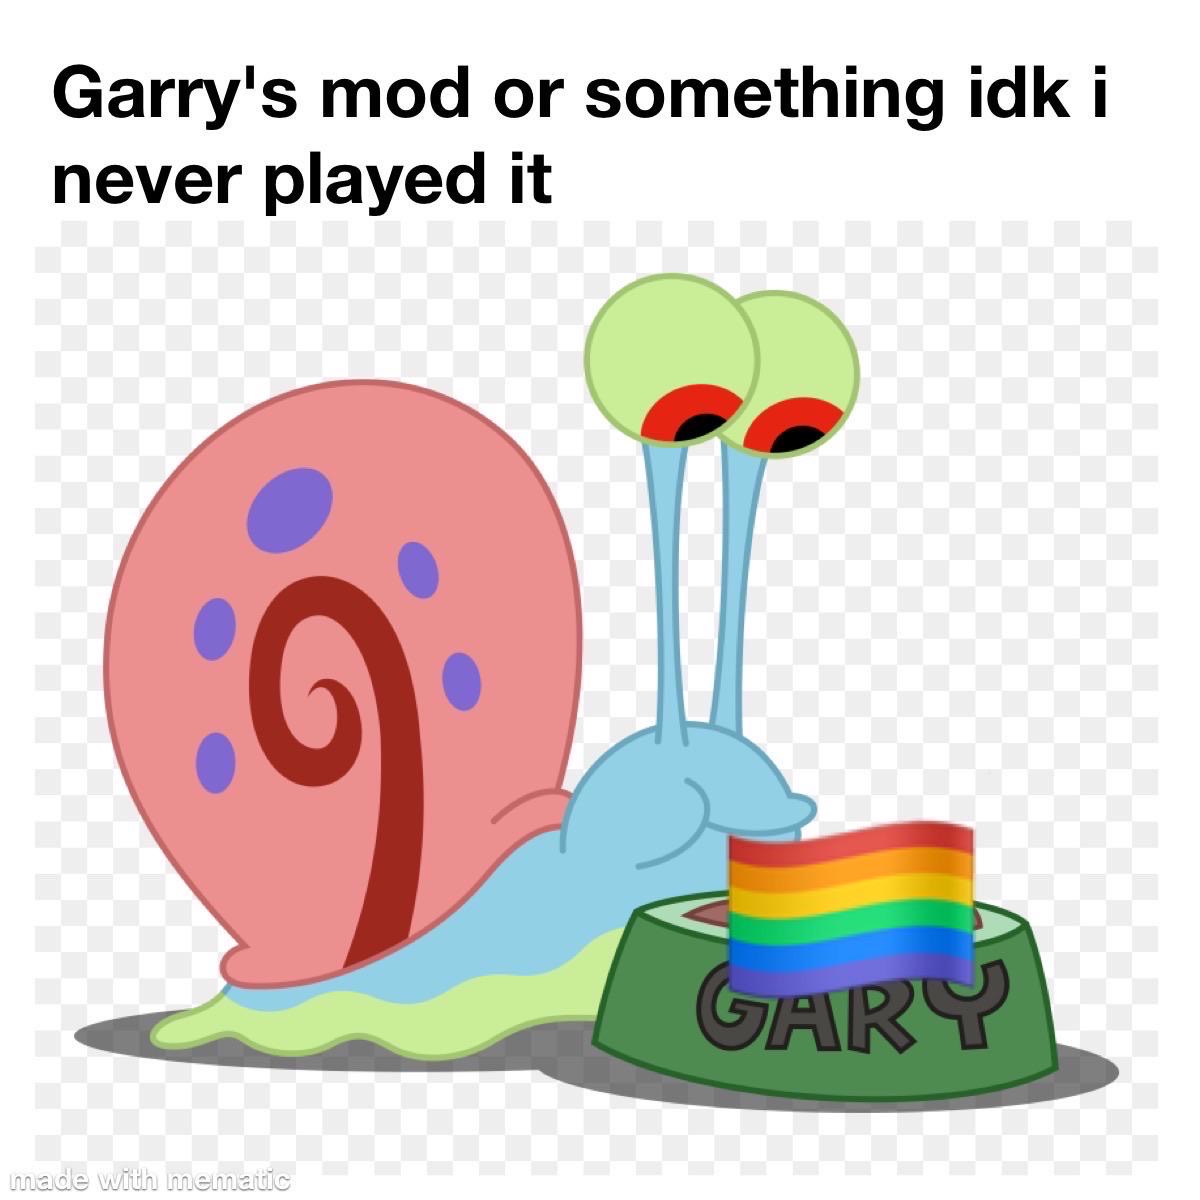 dank memes - spongebob gary - Garry's mod or something idk i never played it Gary made with mematic